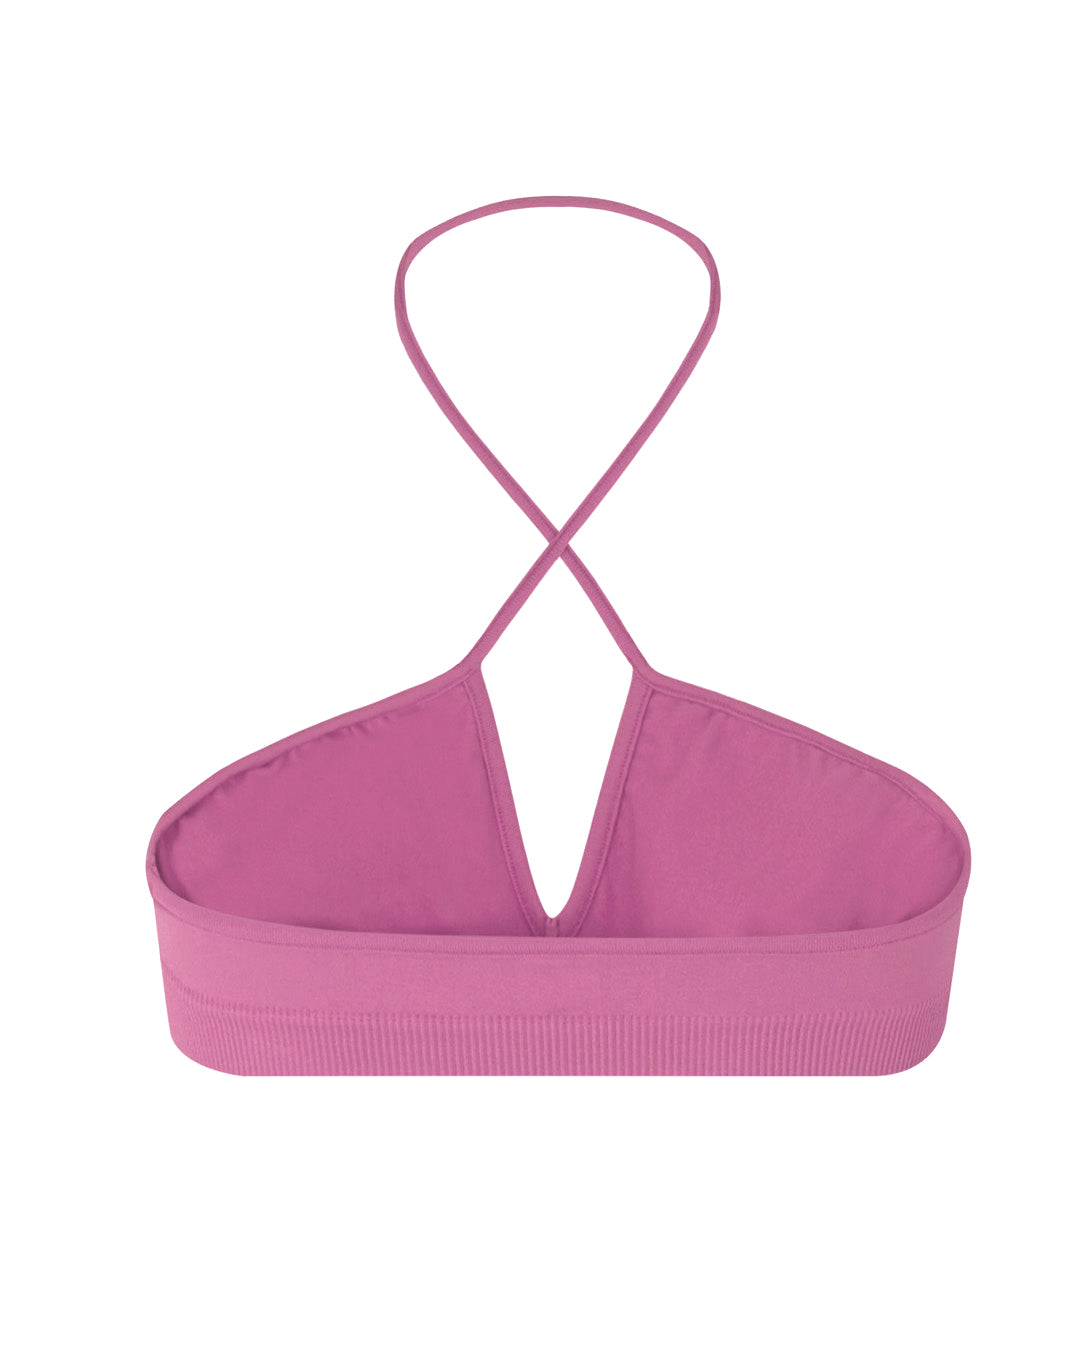 BOUYANT - Bubblegum - halter-neck bikini, activewear, multi-fit top. With a twist neck spaghetti strap detail.